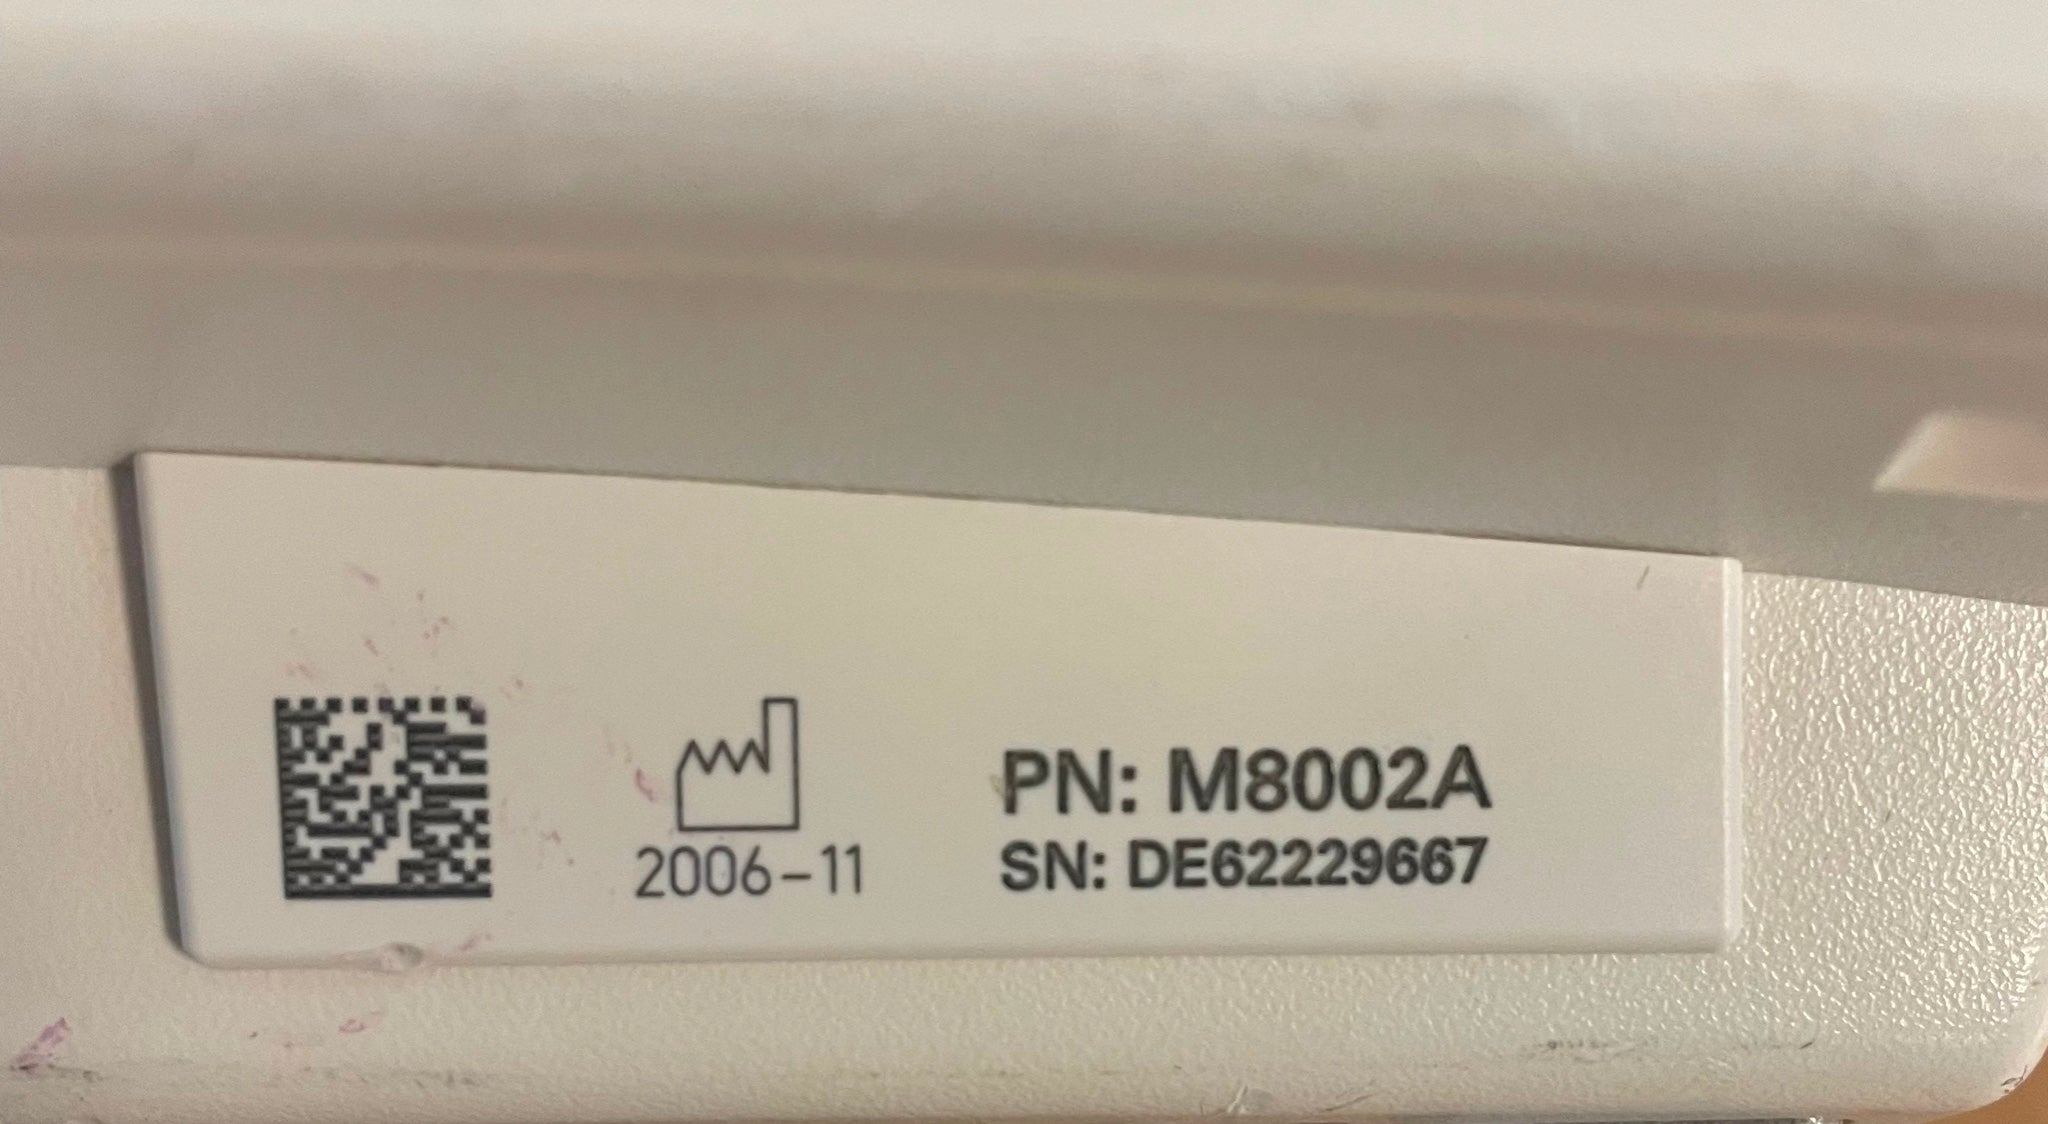 Philips IntelliVue MP30 Color Patient Monitor SN:DE62229667 REF:M8002A DIAGNOSTIC ULTRASOUND MACHINES FOR SALE